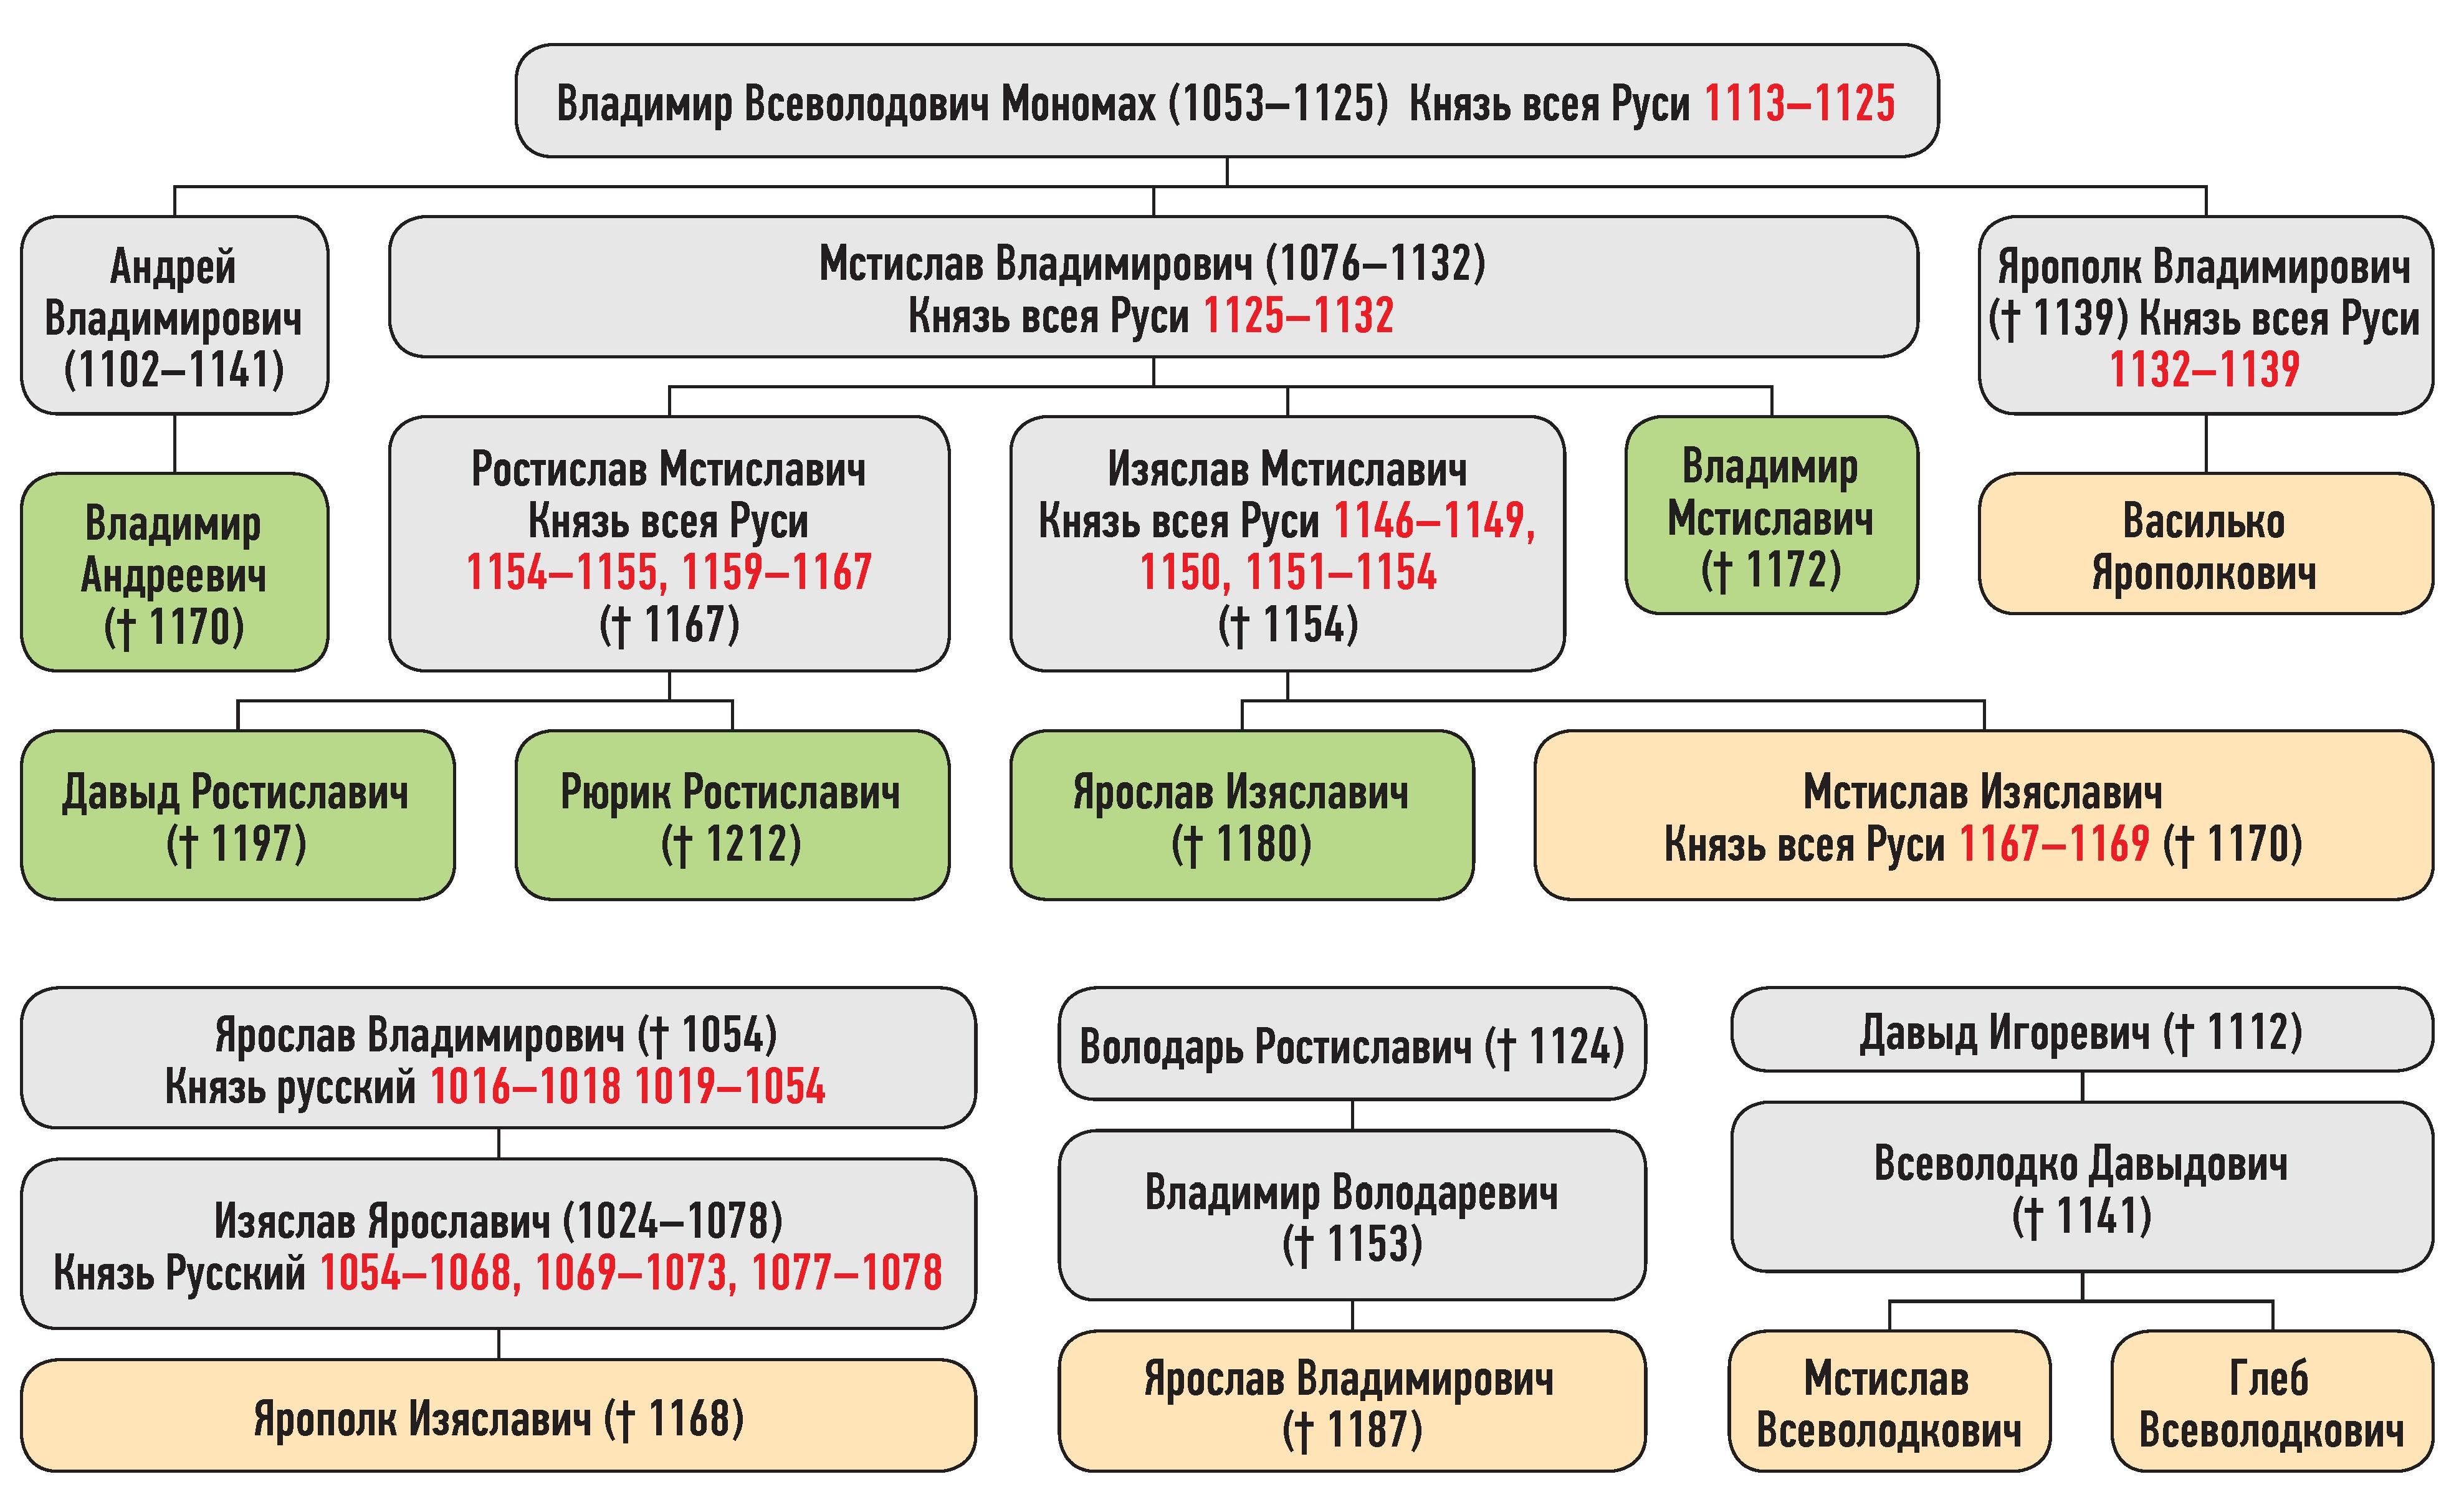 Генеалогическая схема к усобице Мстислава Изяславича и Владимира Мстиславича в 1167 г.